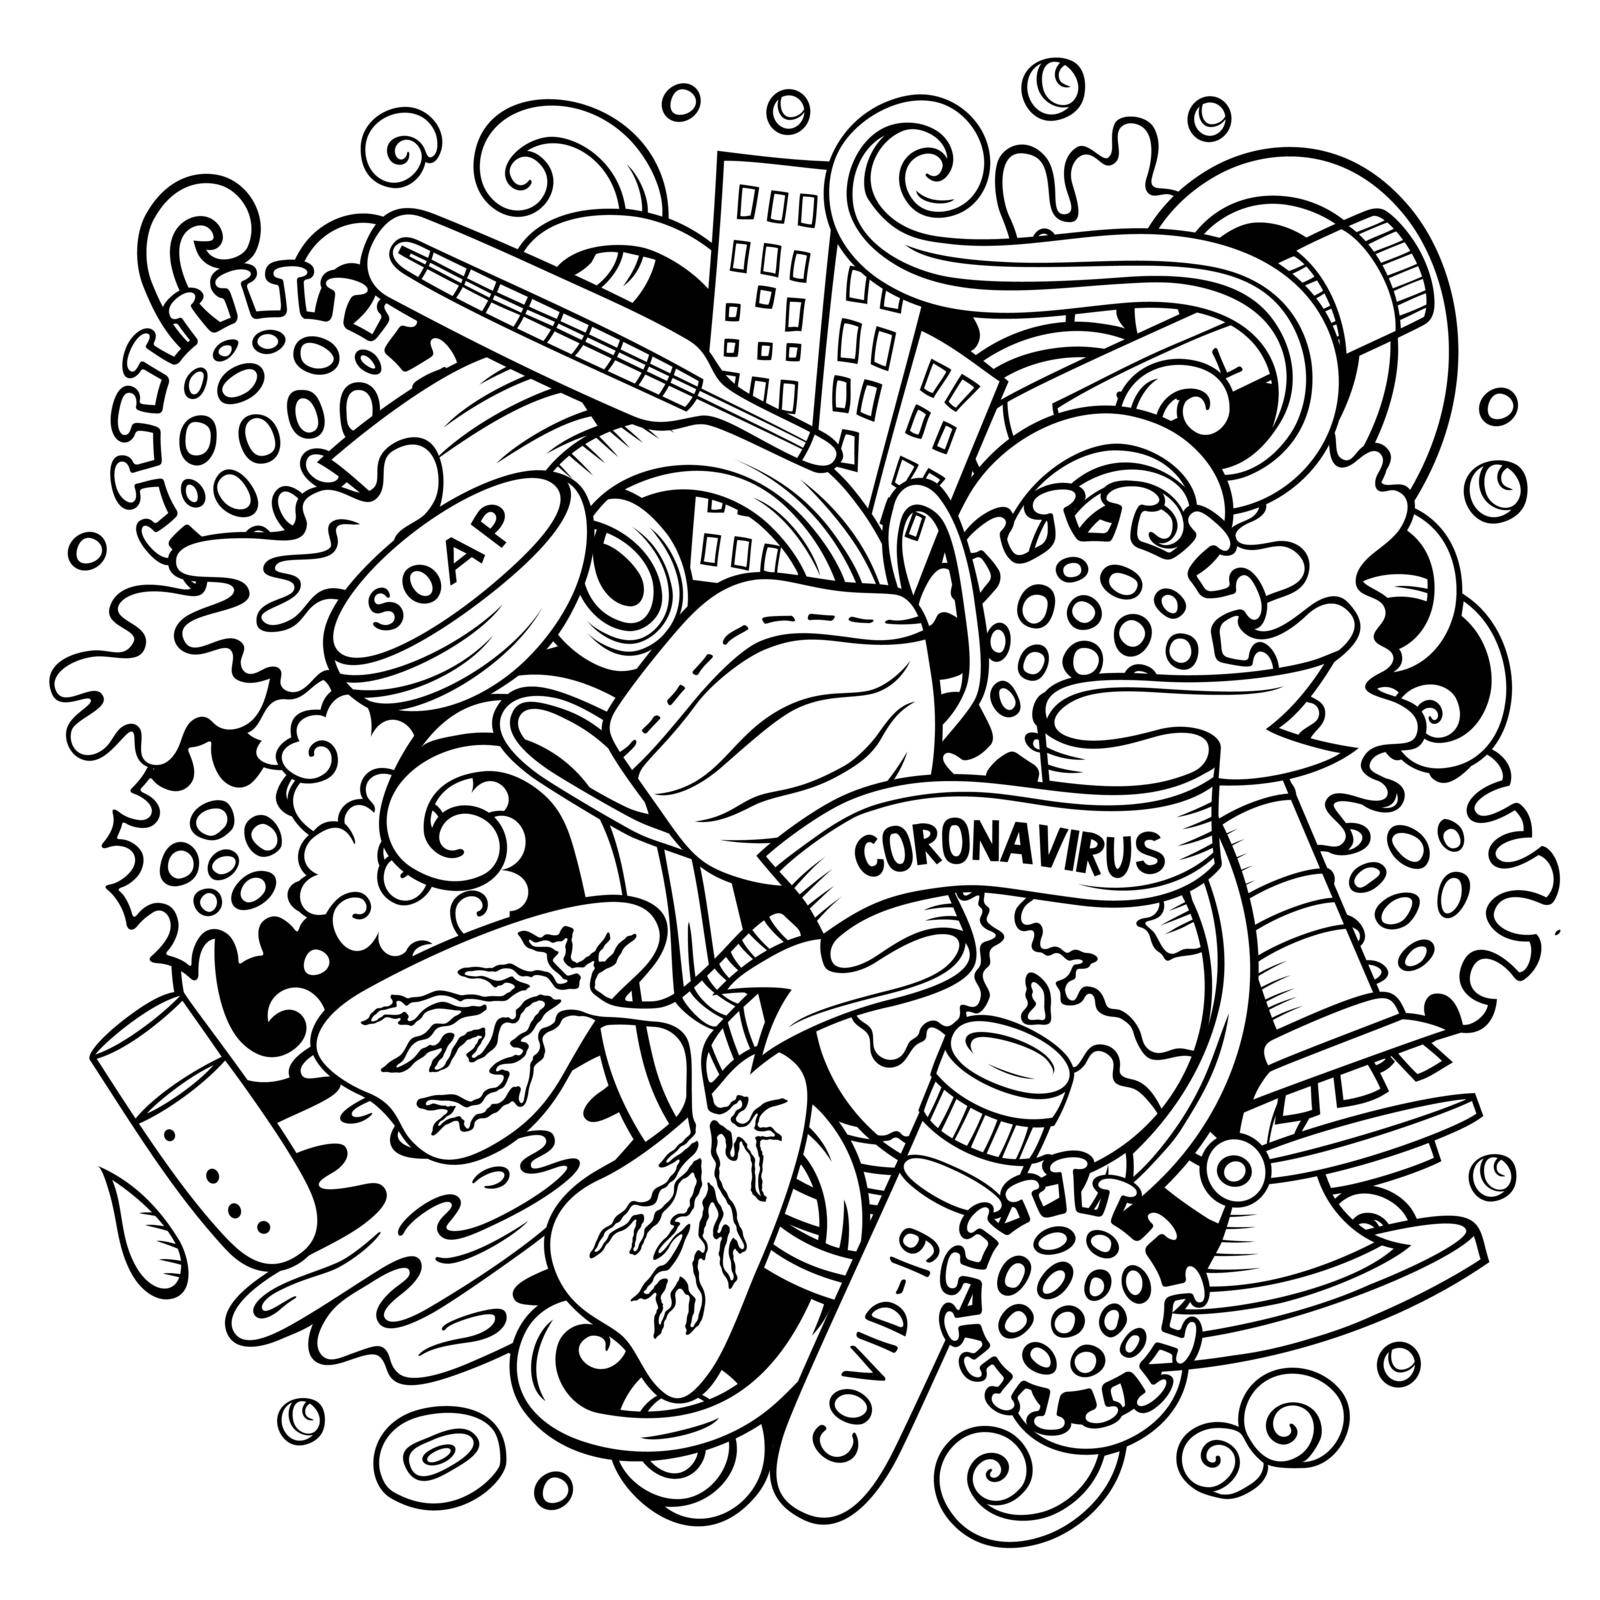 Cartoon vector doodles Coronavirus illustration. Line art epidemic picture by balabolka